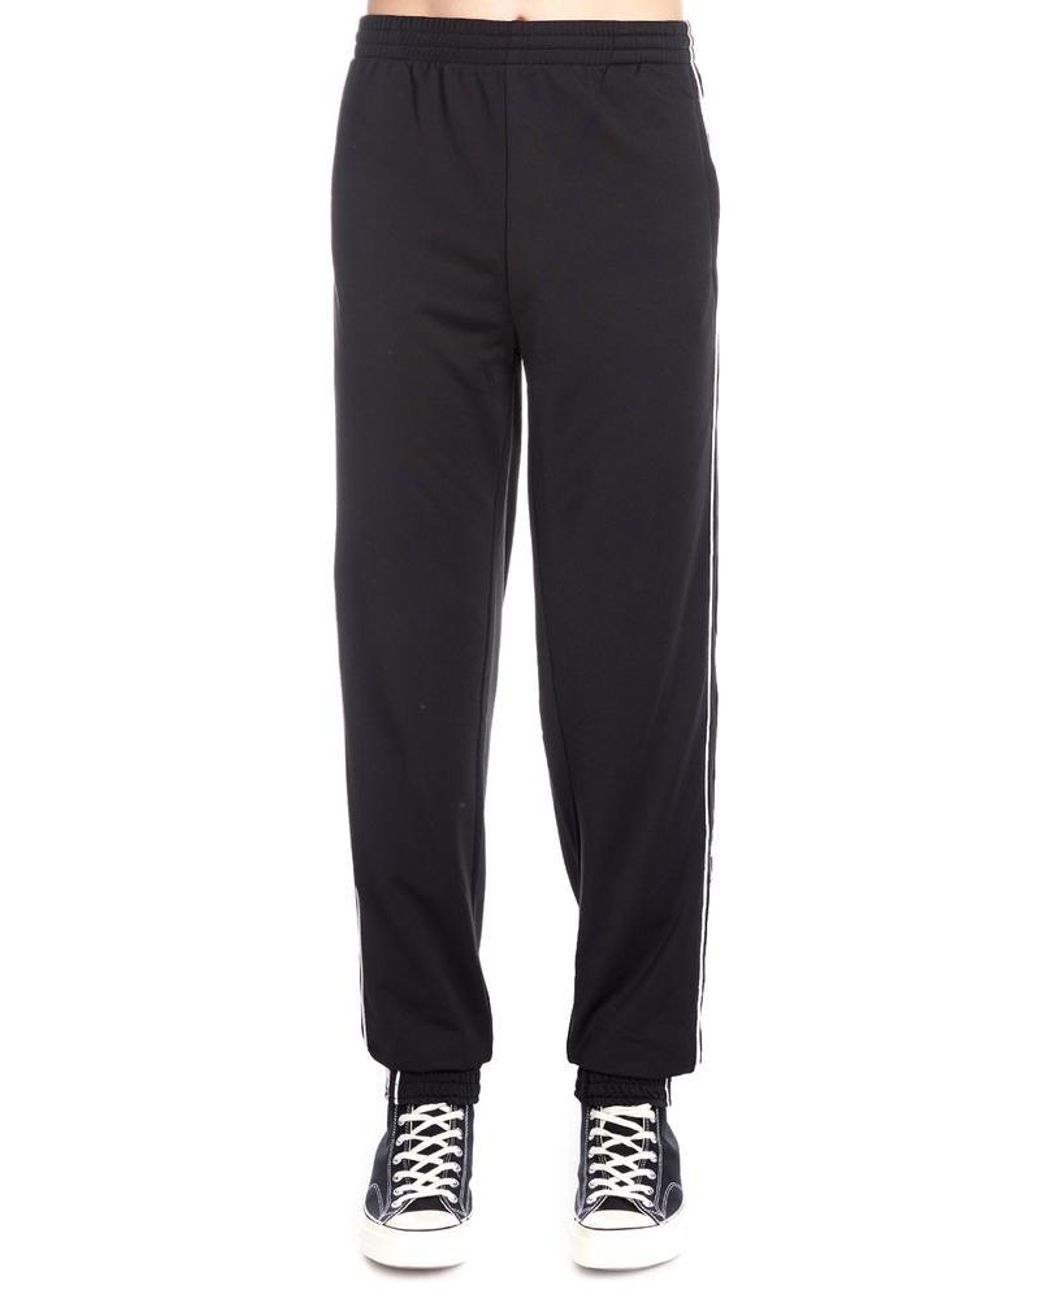 Kappa Kontroll Synthetic Logo Track Pants in Black for Men - Lyst